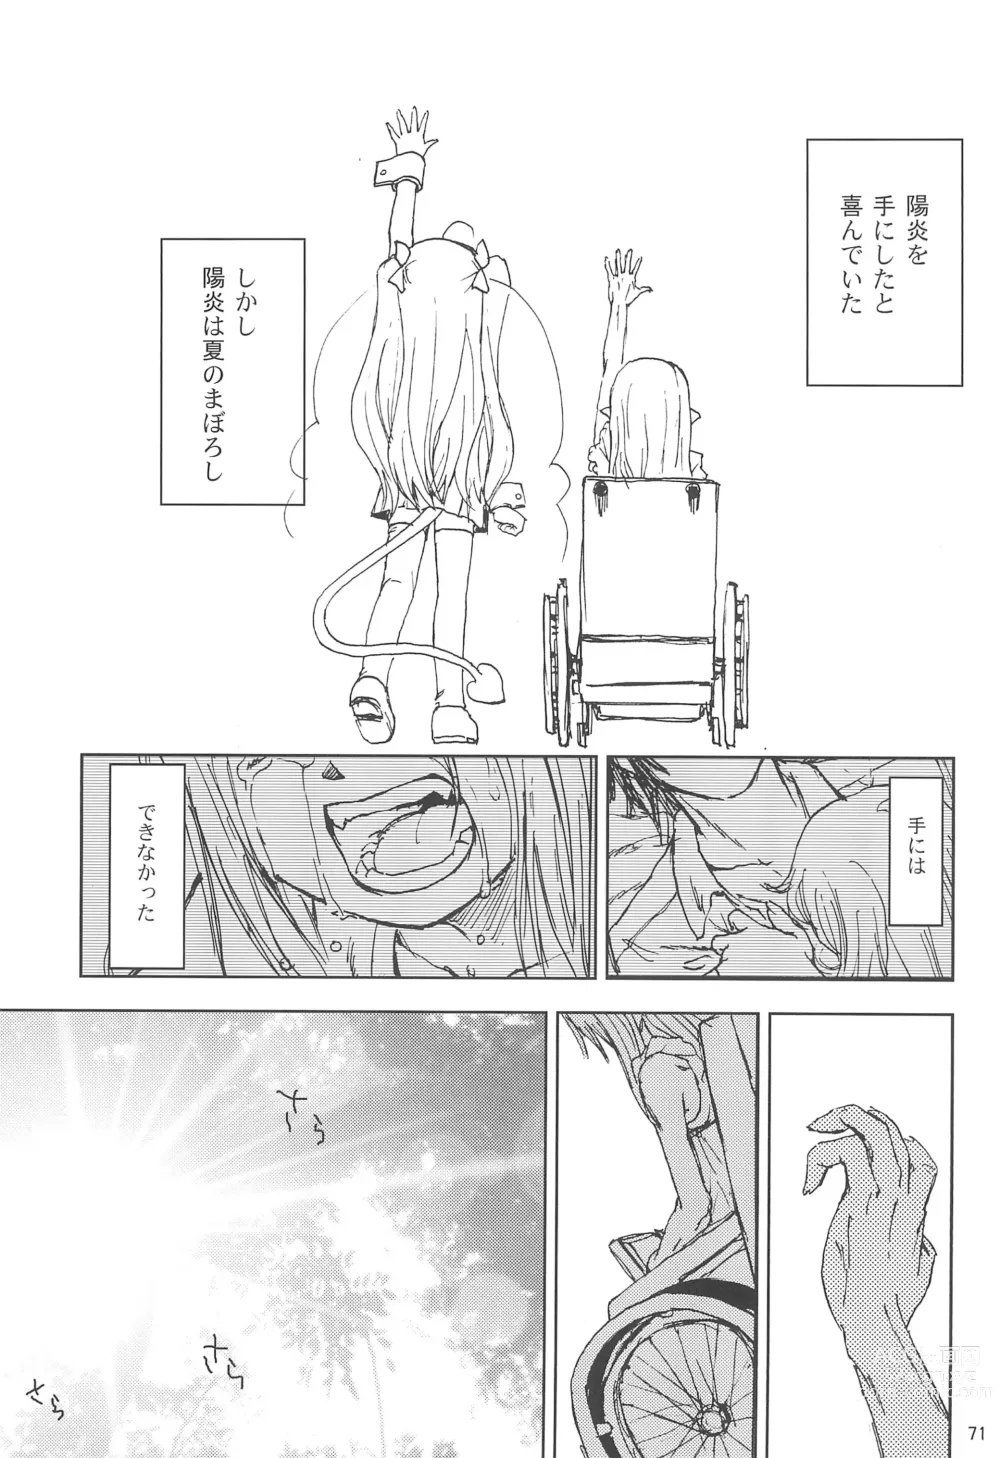 Page 71 of doujinshi Maigo no Maigo no Hime-sama Plus